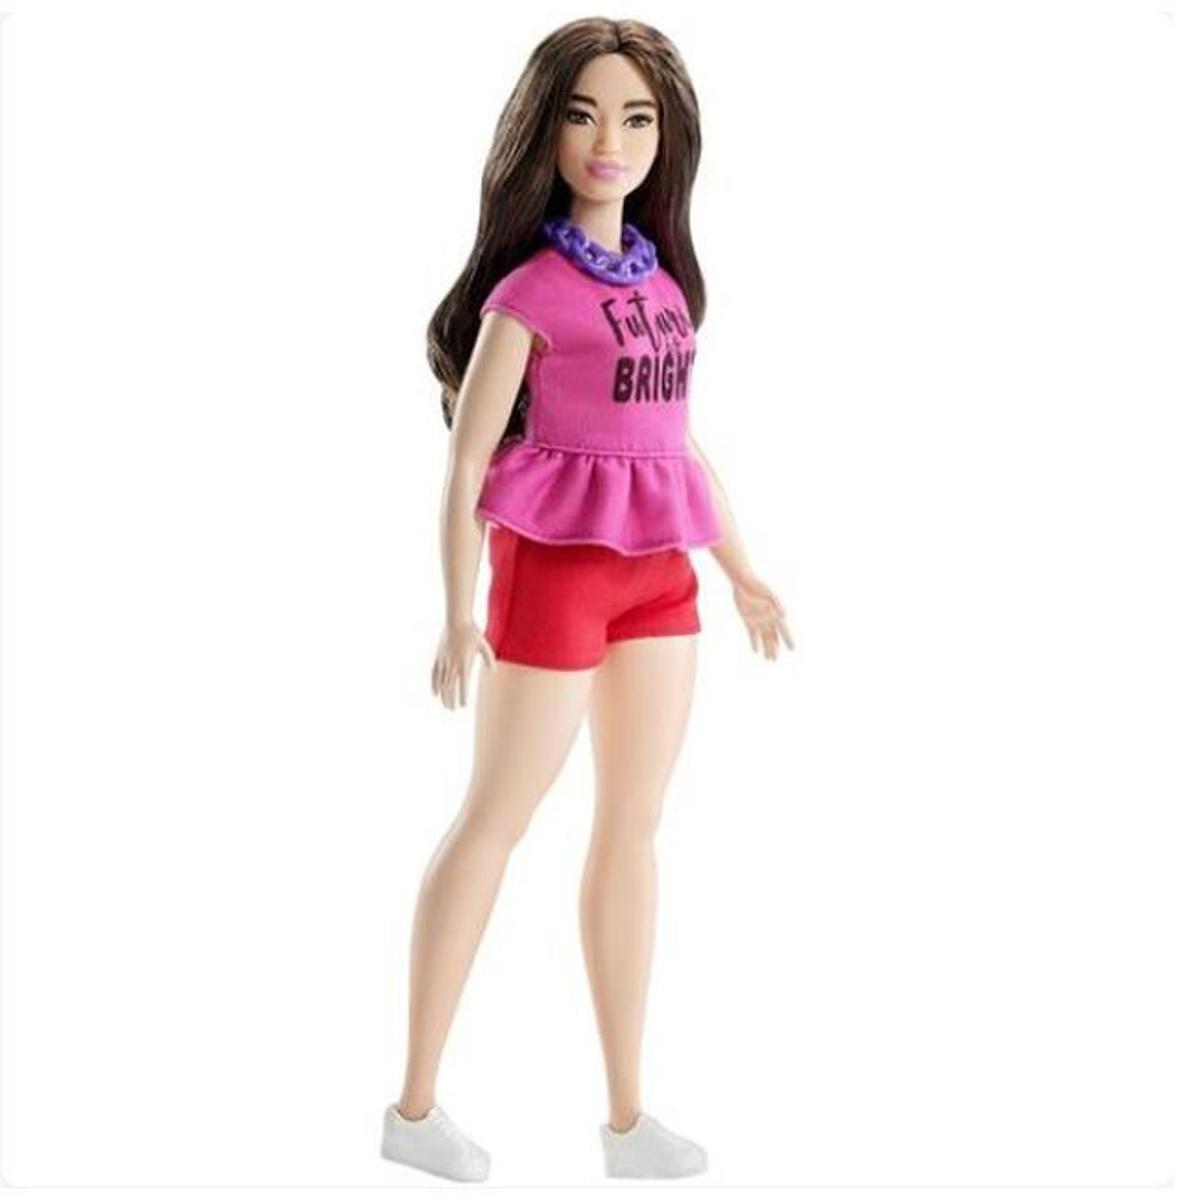 Barbie fashionista